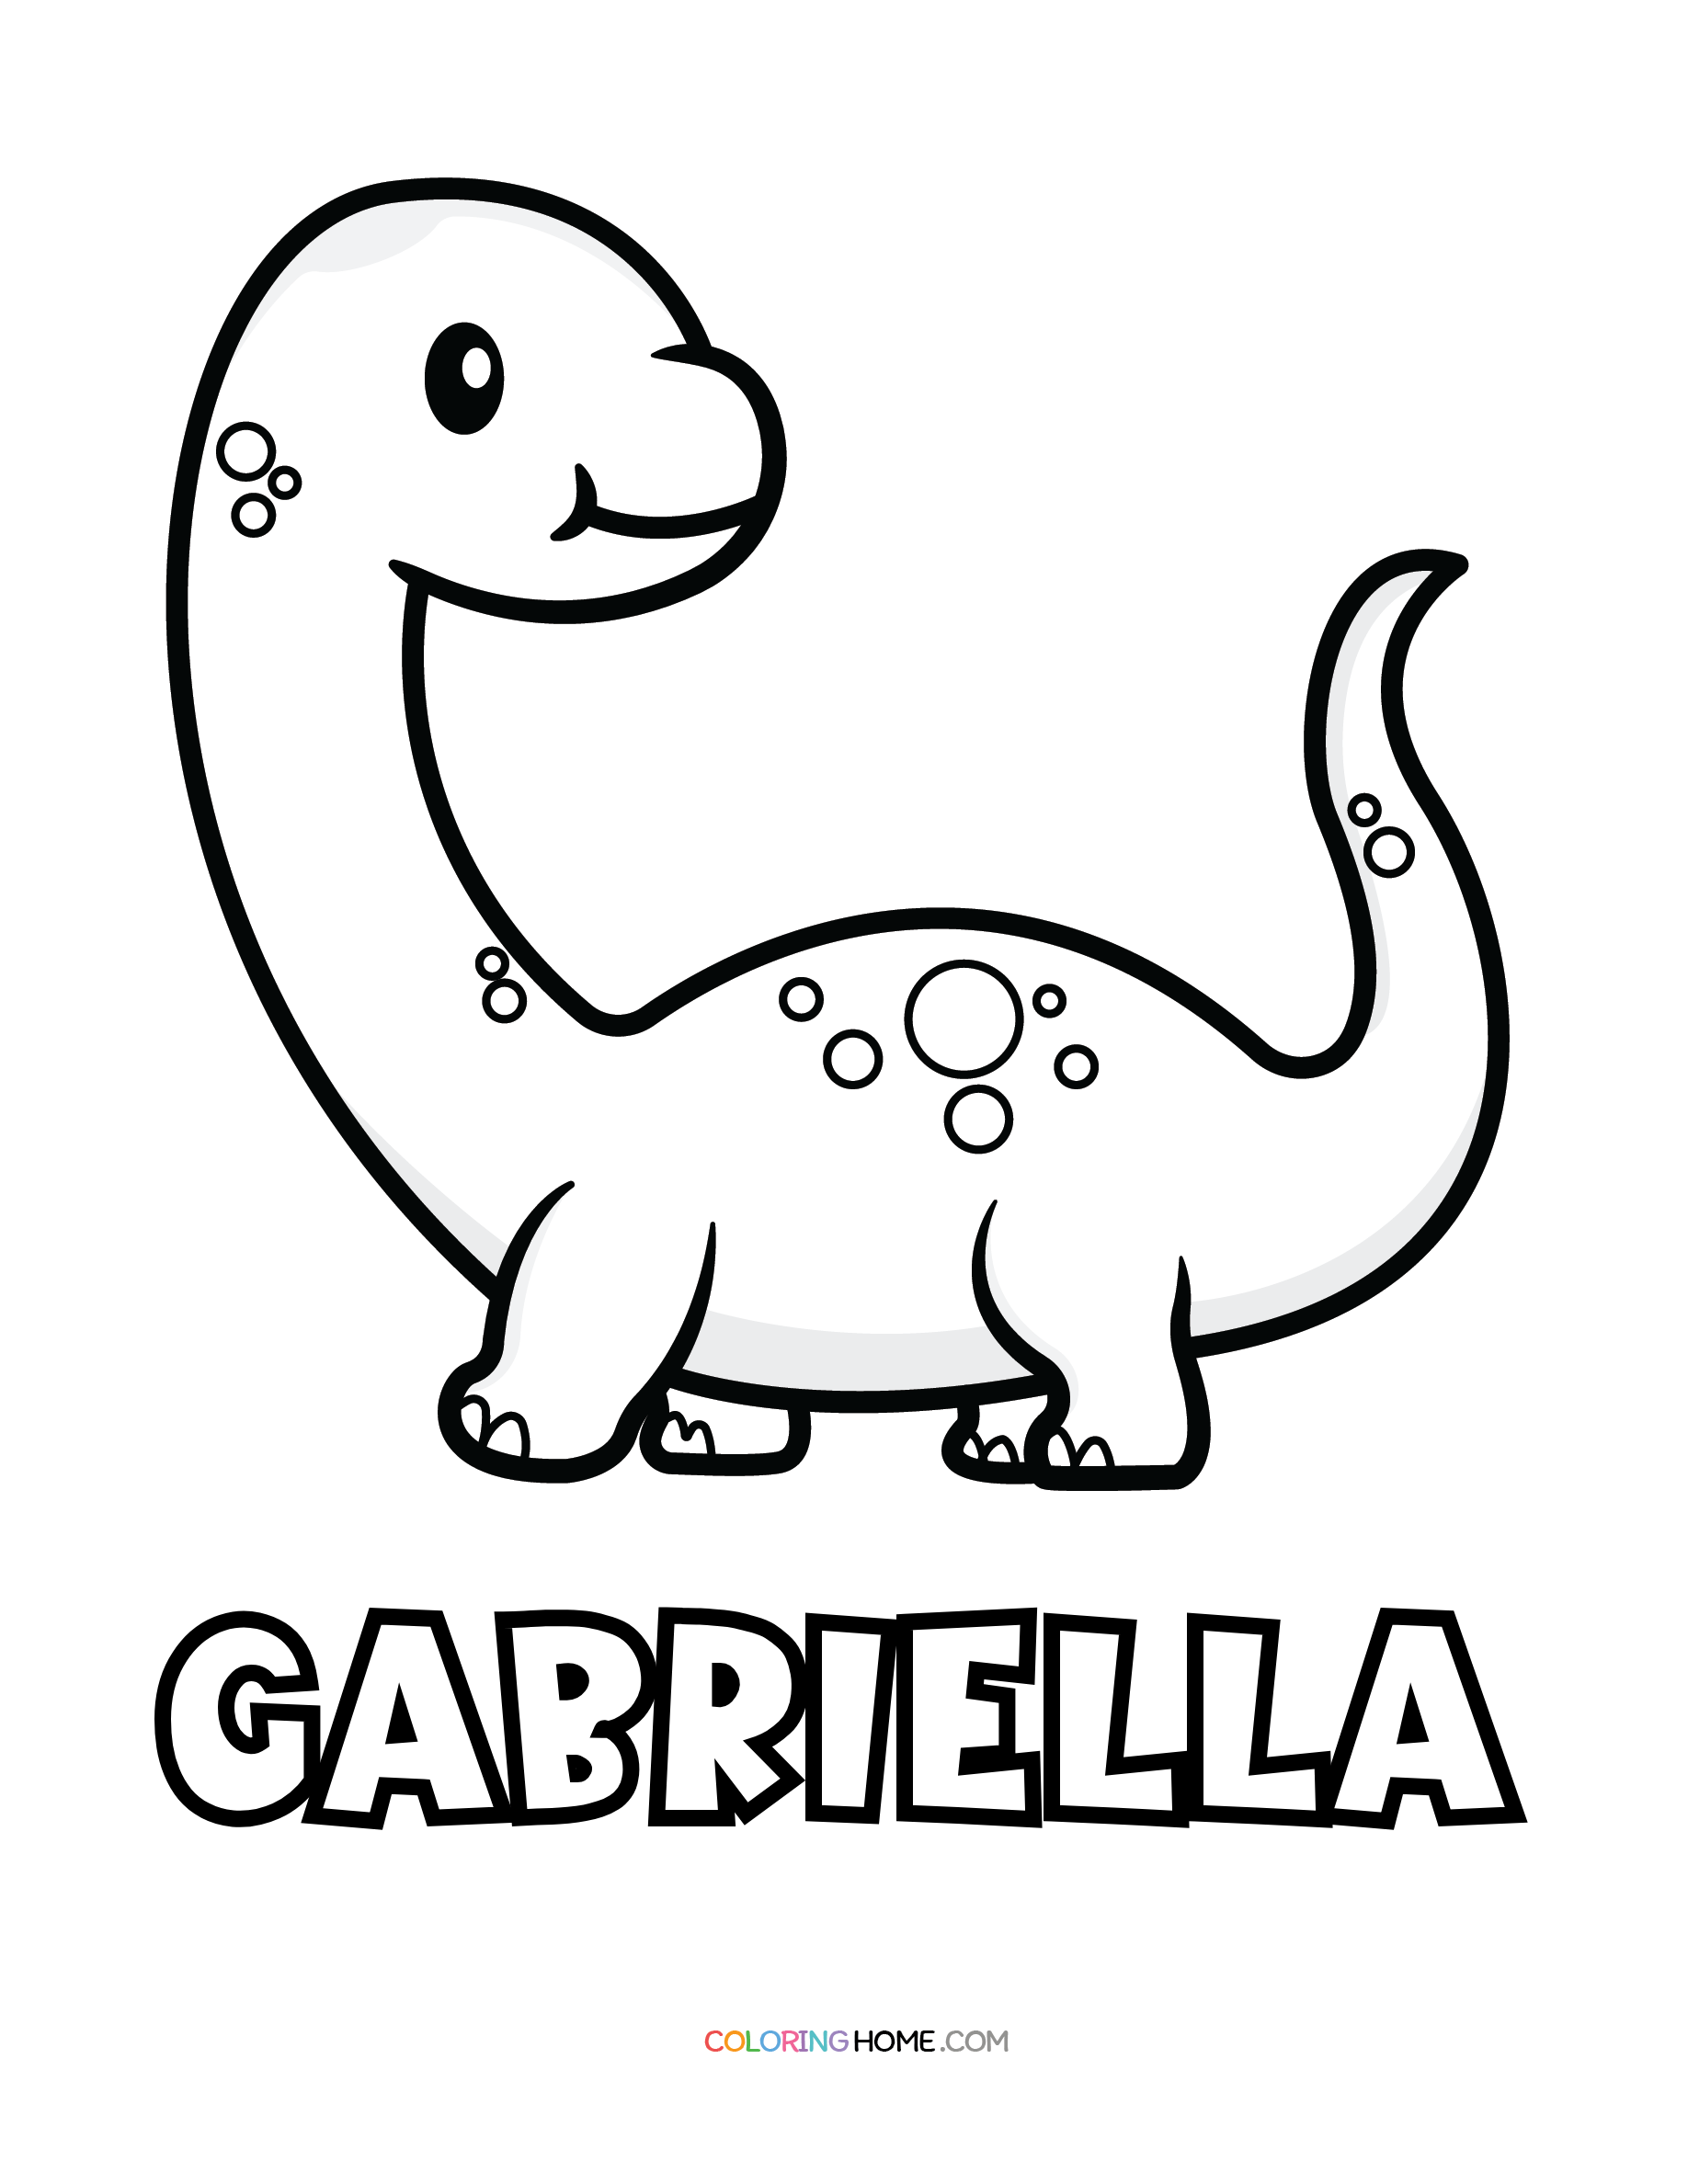 Gabriella dinosaur coloring page